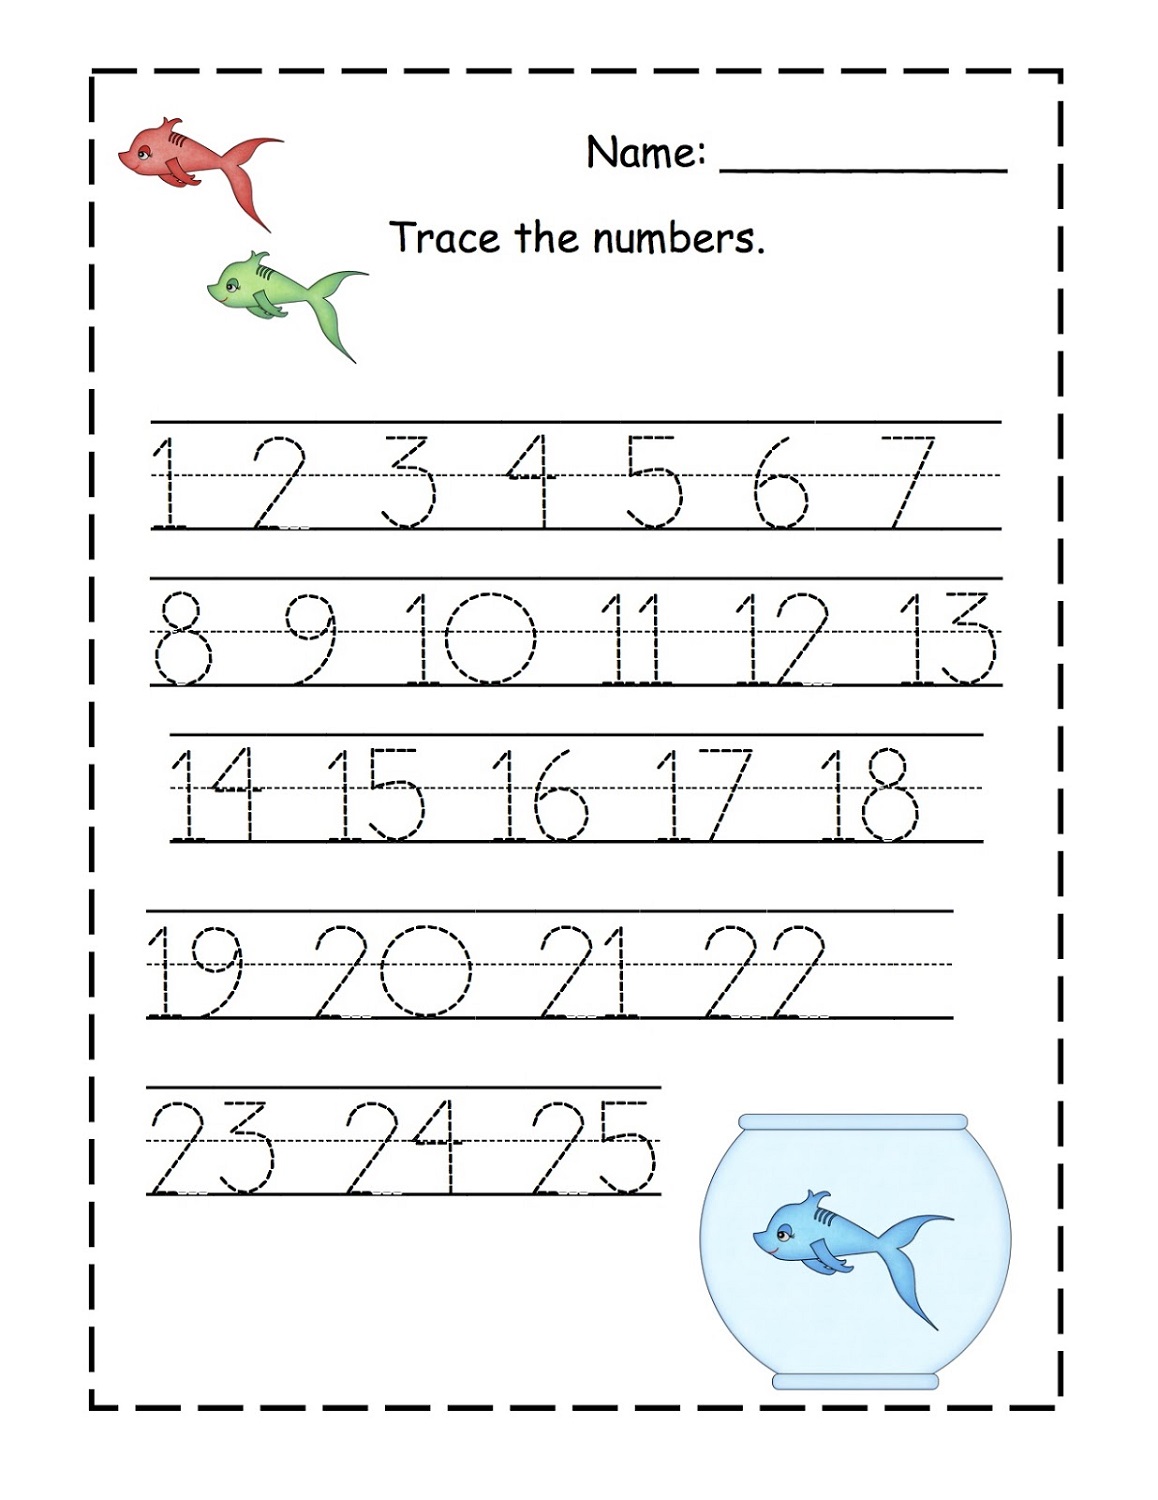 trace-number-worksheets-1-25